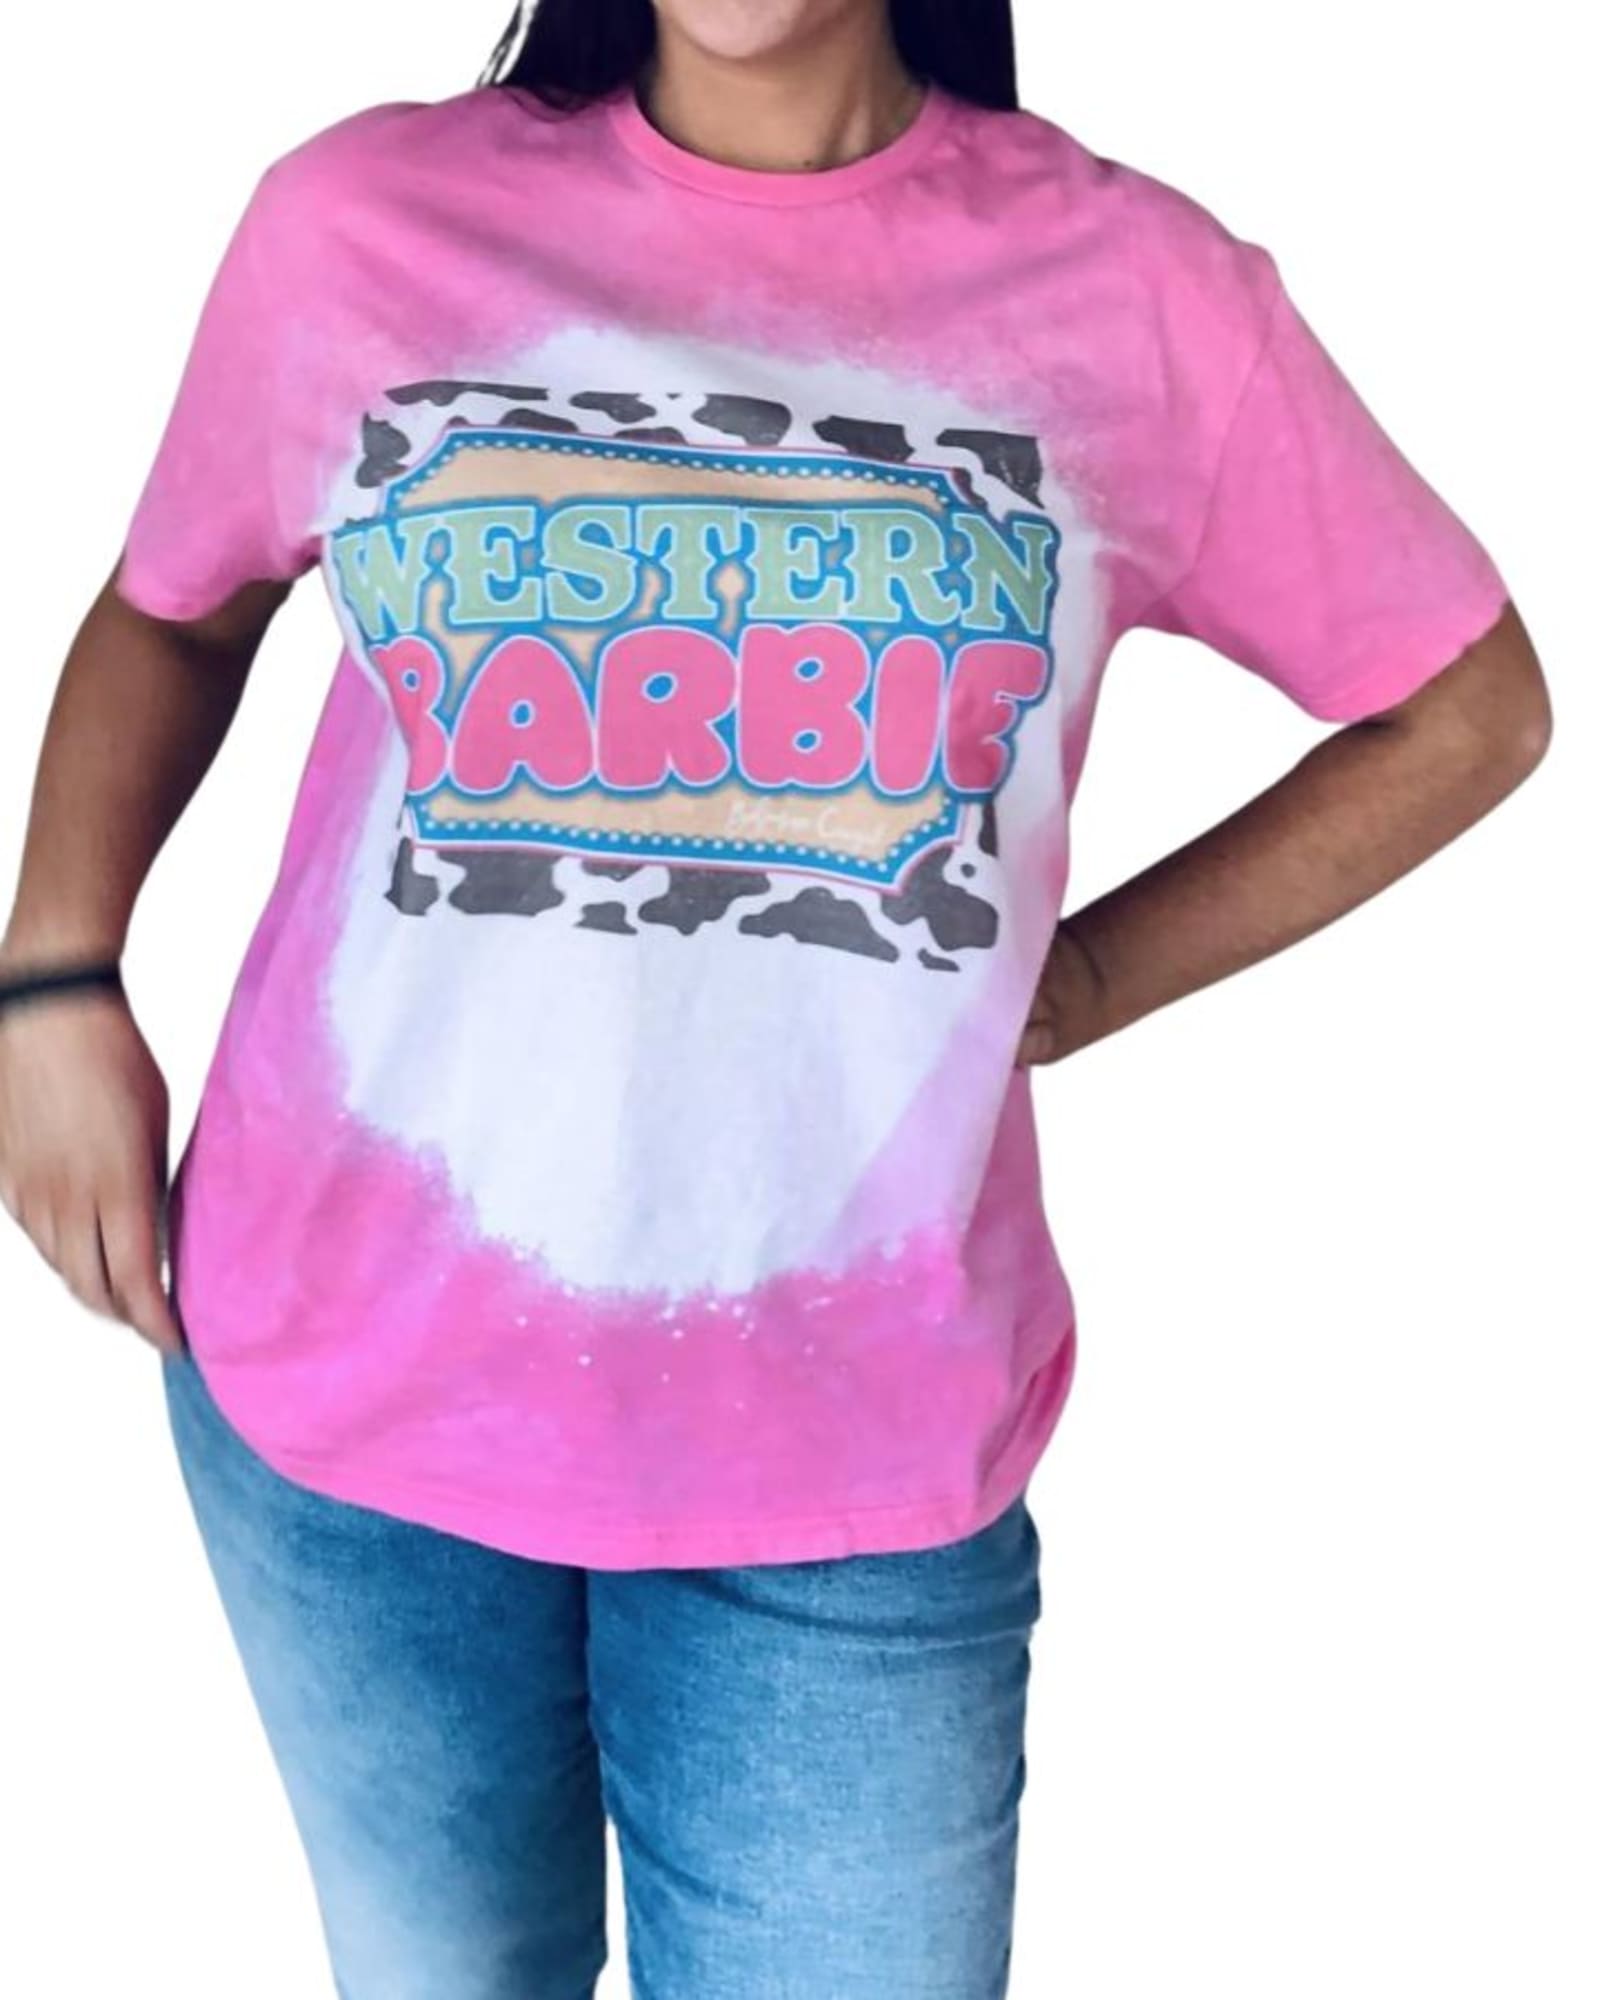 Western Barbi Tee Shirt in Hot Pink | Hot Pink